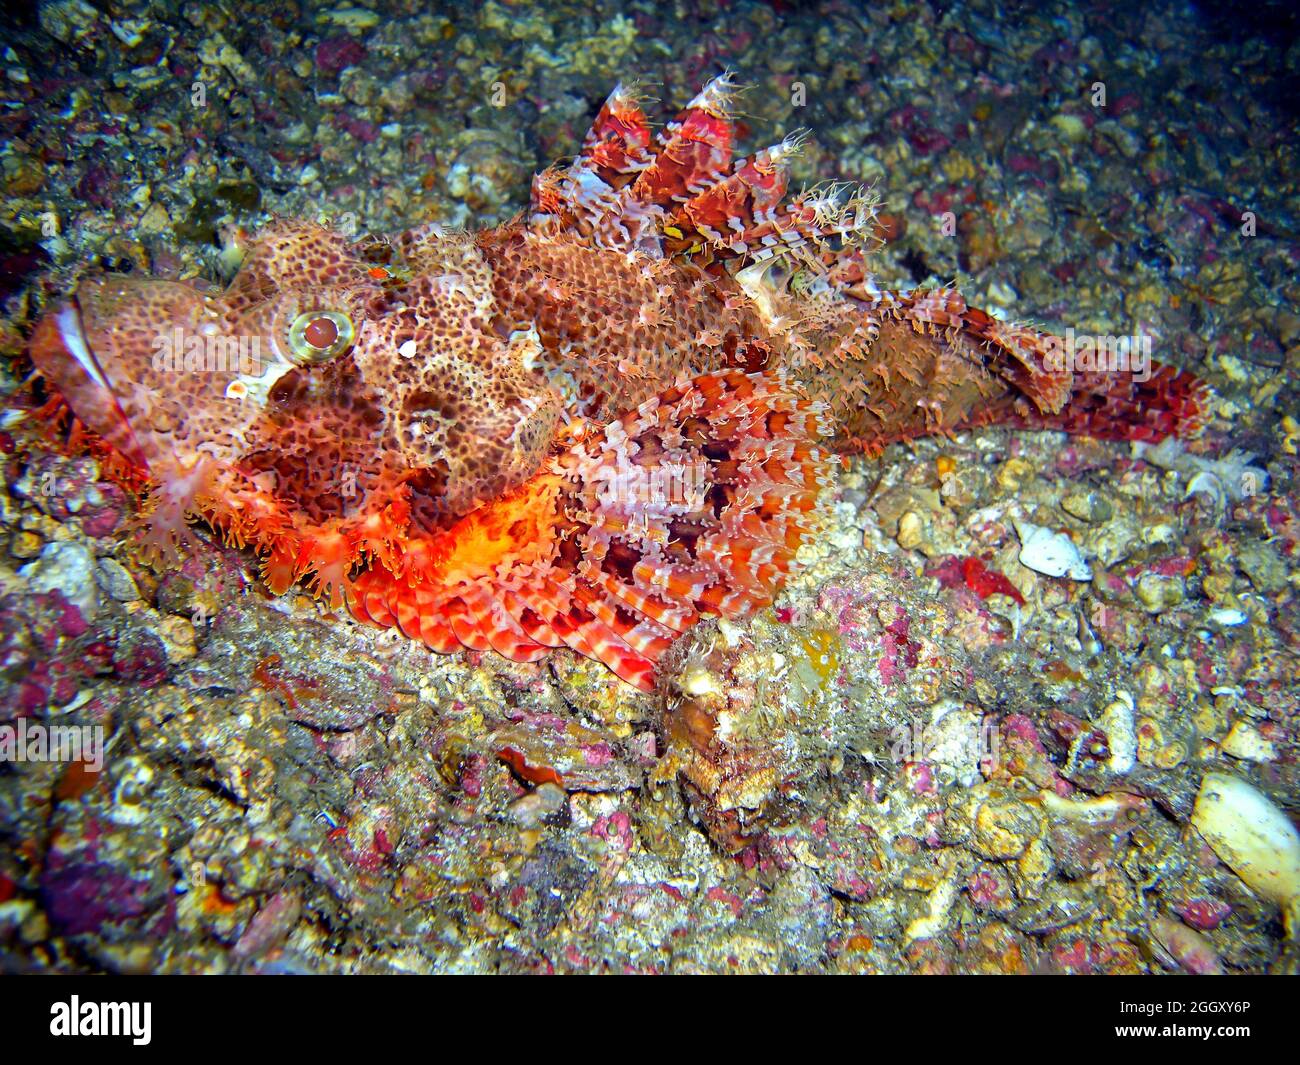 Tasseled Scorpion fish (Scorpaenopsis Oxycephala) swims in the filipino sea 10.2.2012 Stock Photo